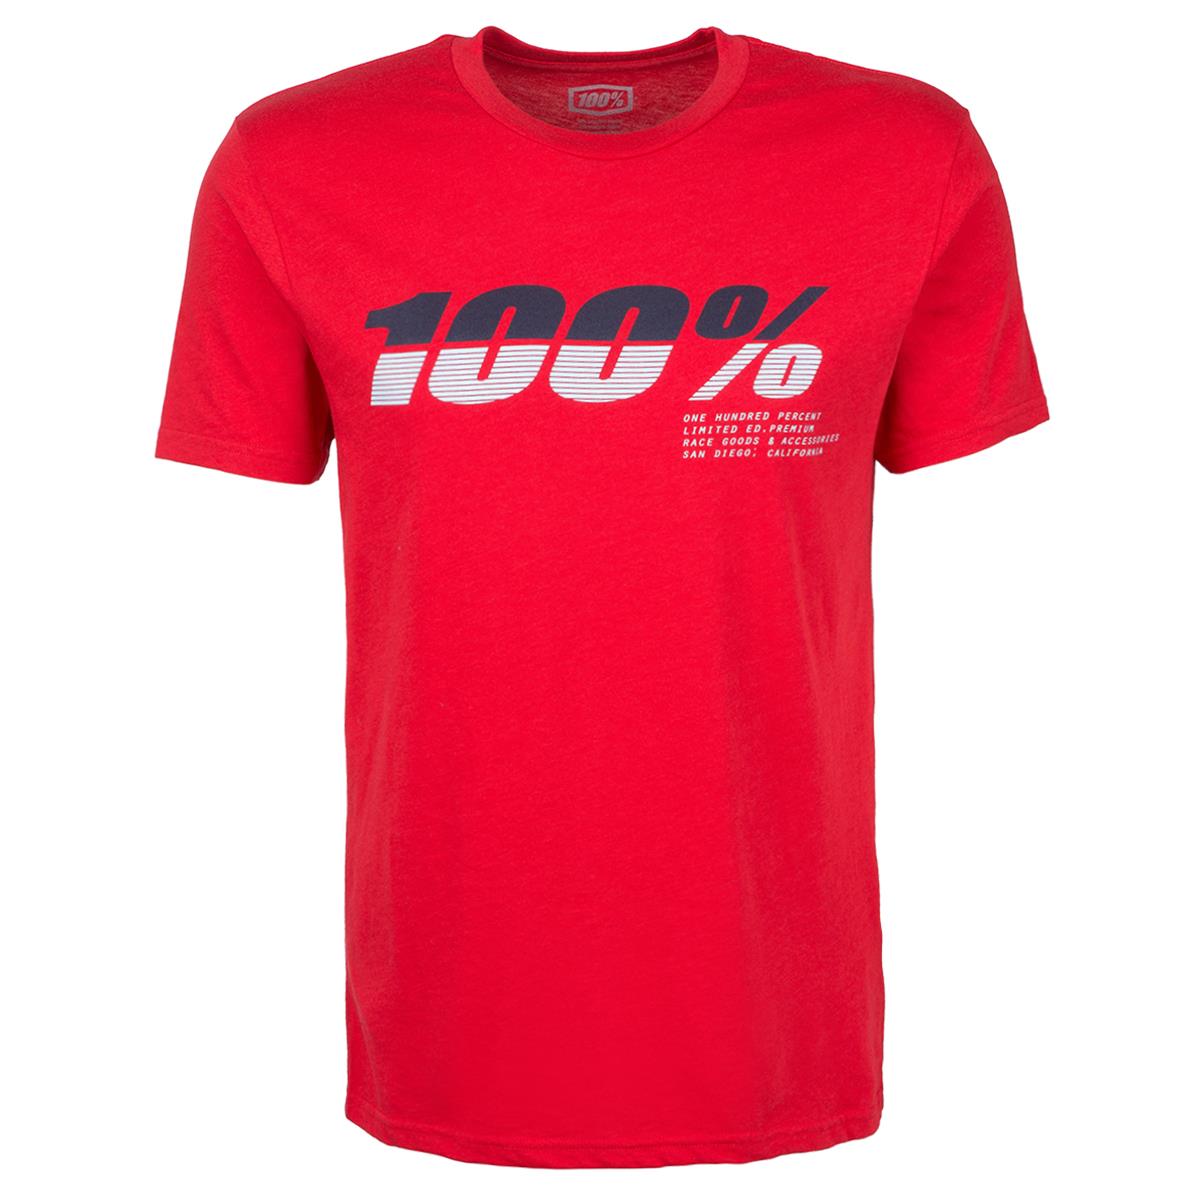 100% T-Shirt Bristol Rot